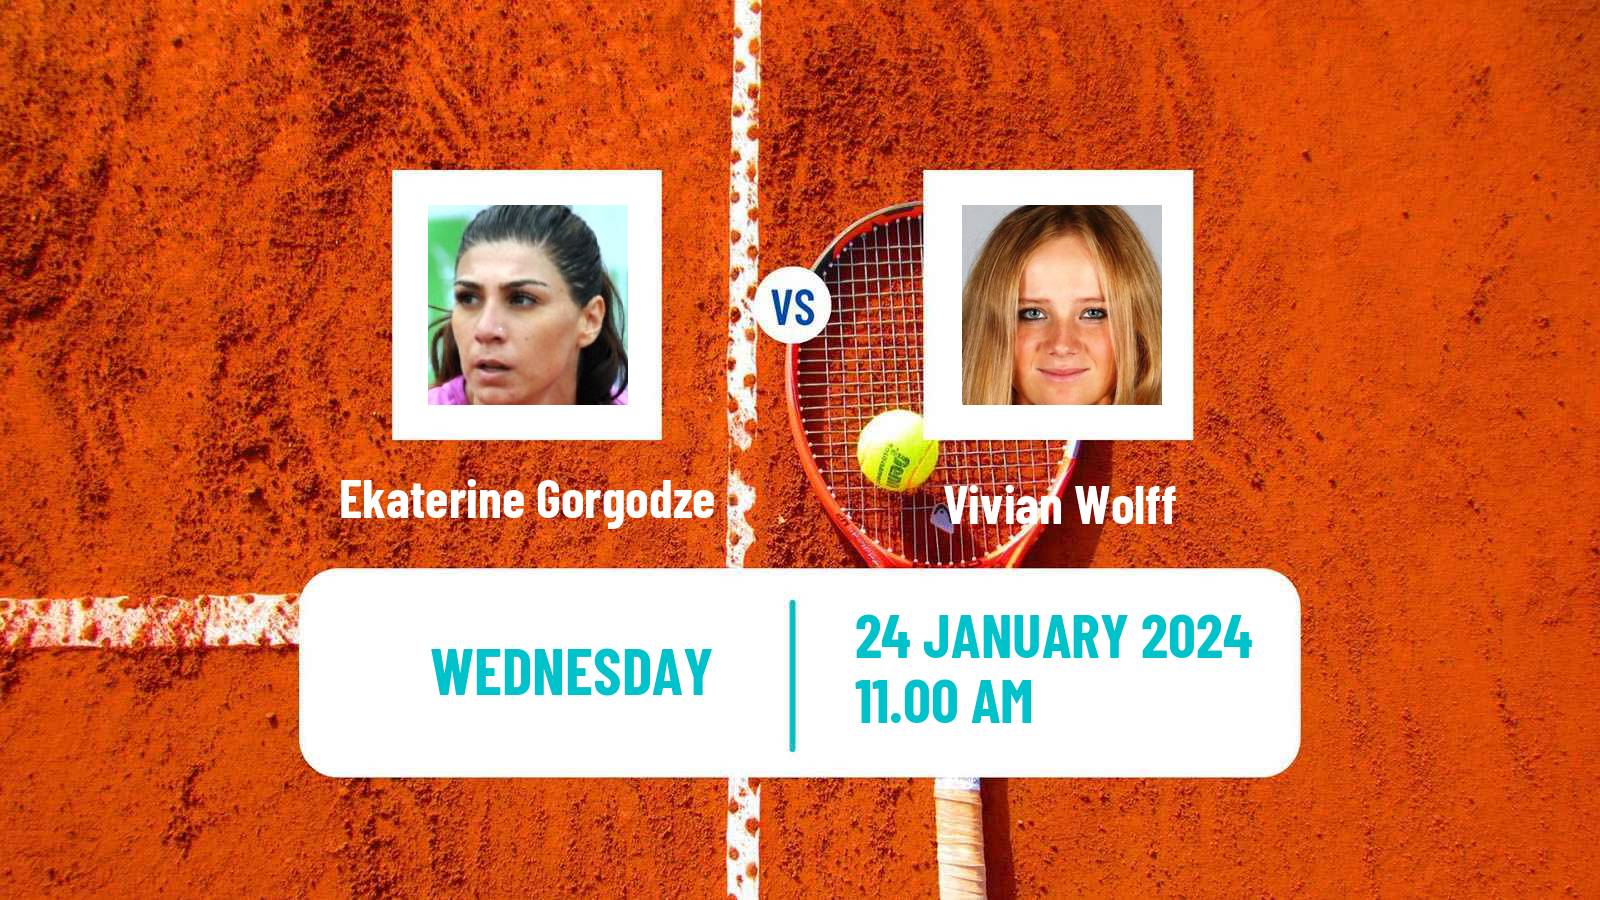 Tennis ITF W75 H Vero Beach Fl Women Ekaterine Gorgodze - Vivian Wolff